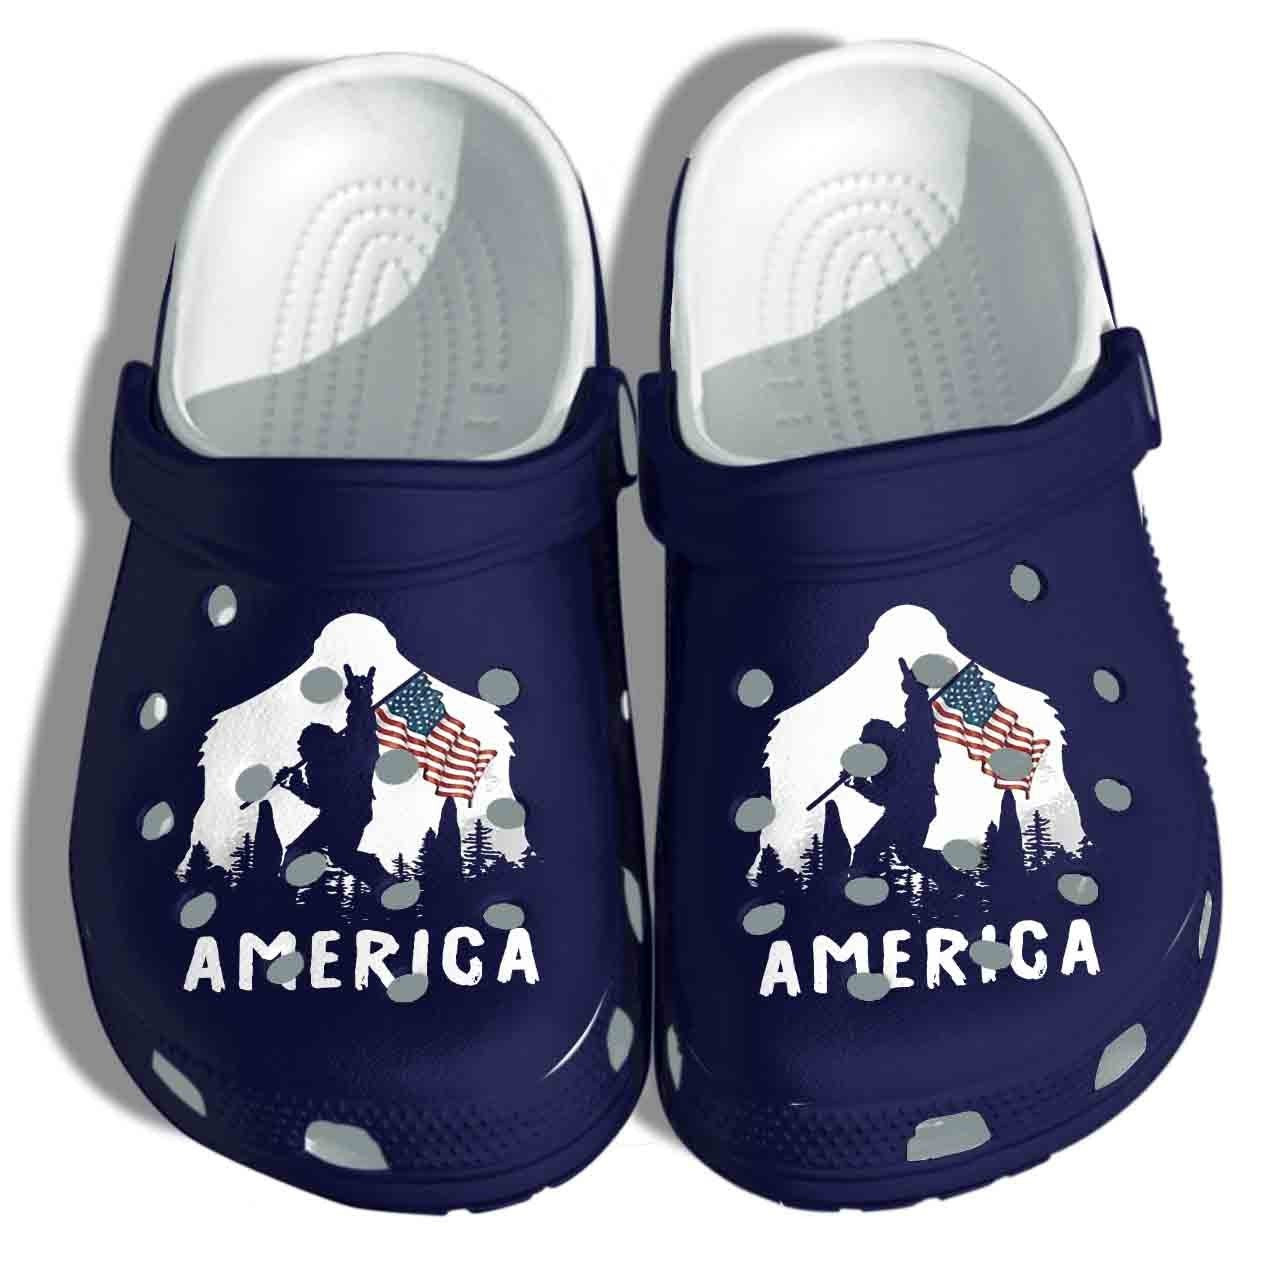 Bigfoot Holding Flag Crocs Shoes Clogs - 4Th Of July America Flag Crocs Shoes Clogs Birthday Gift For Men Women